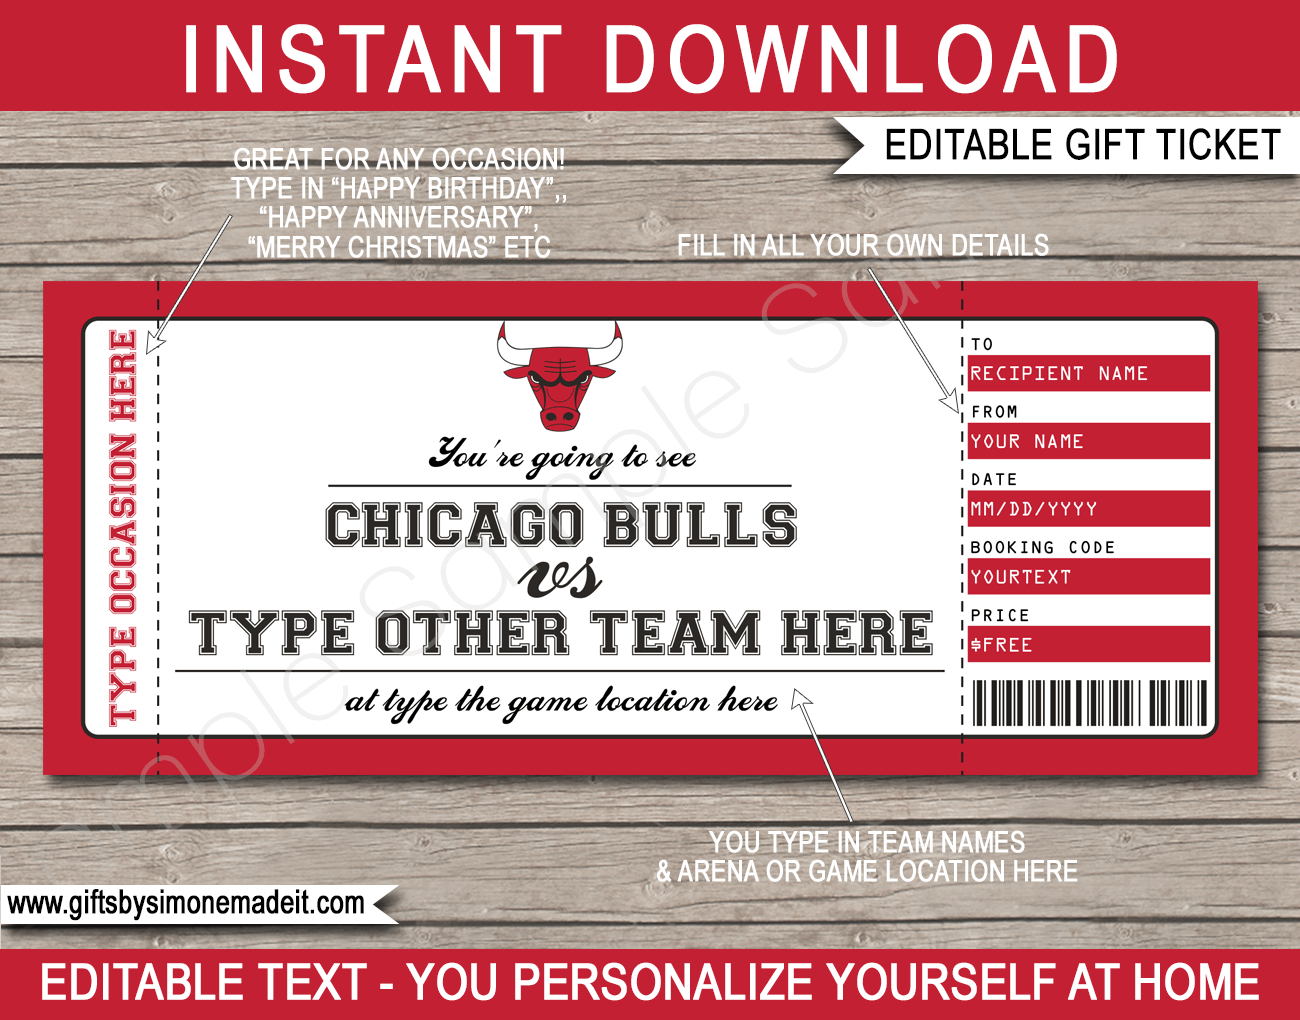 Personalized Chicago Bulls Logo Sign NBA Basketball Wall Decor